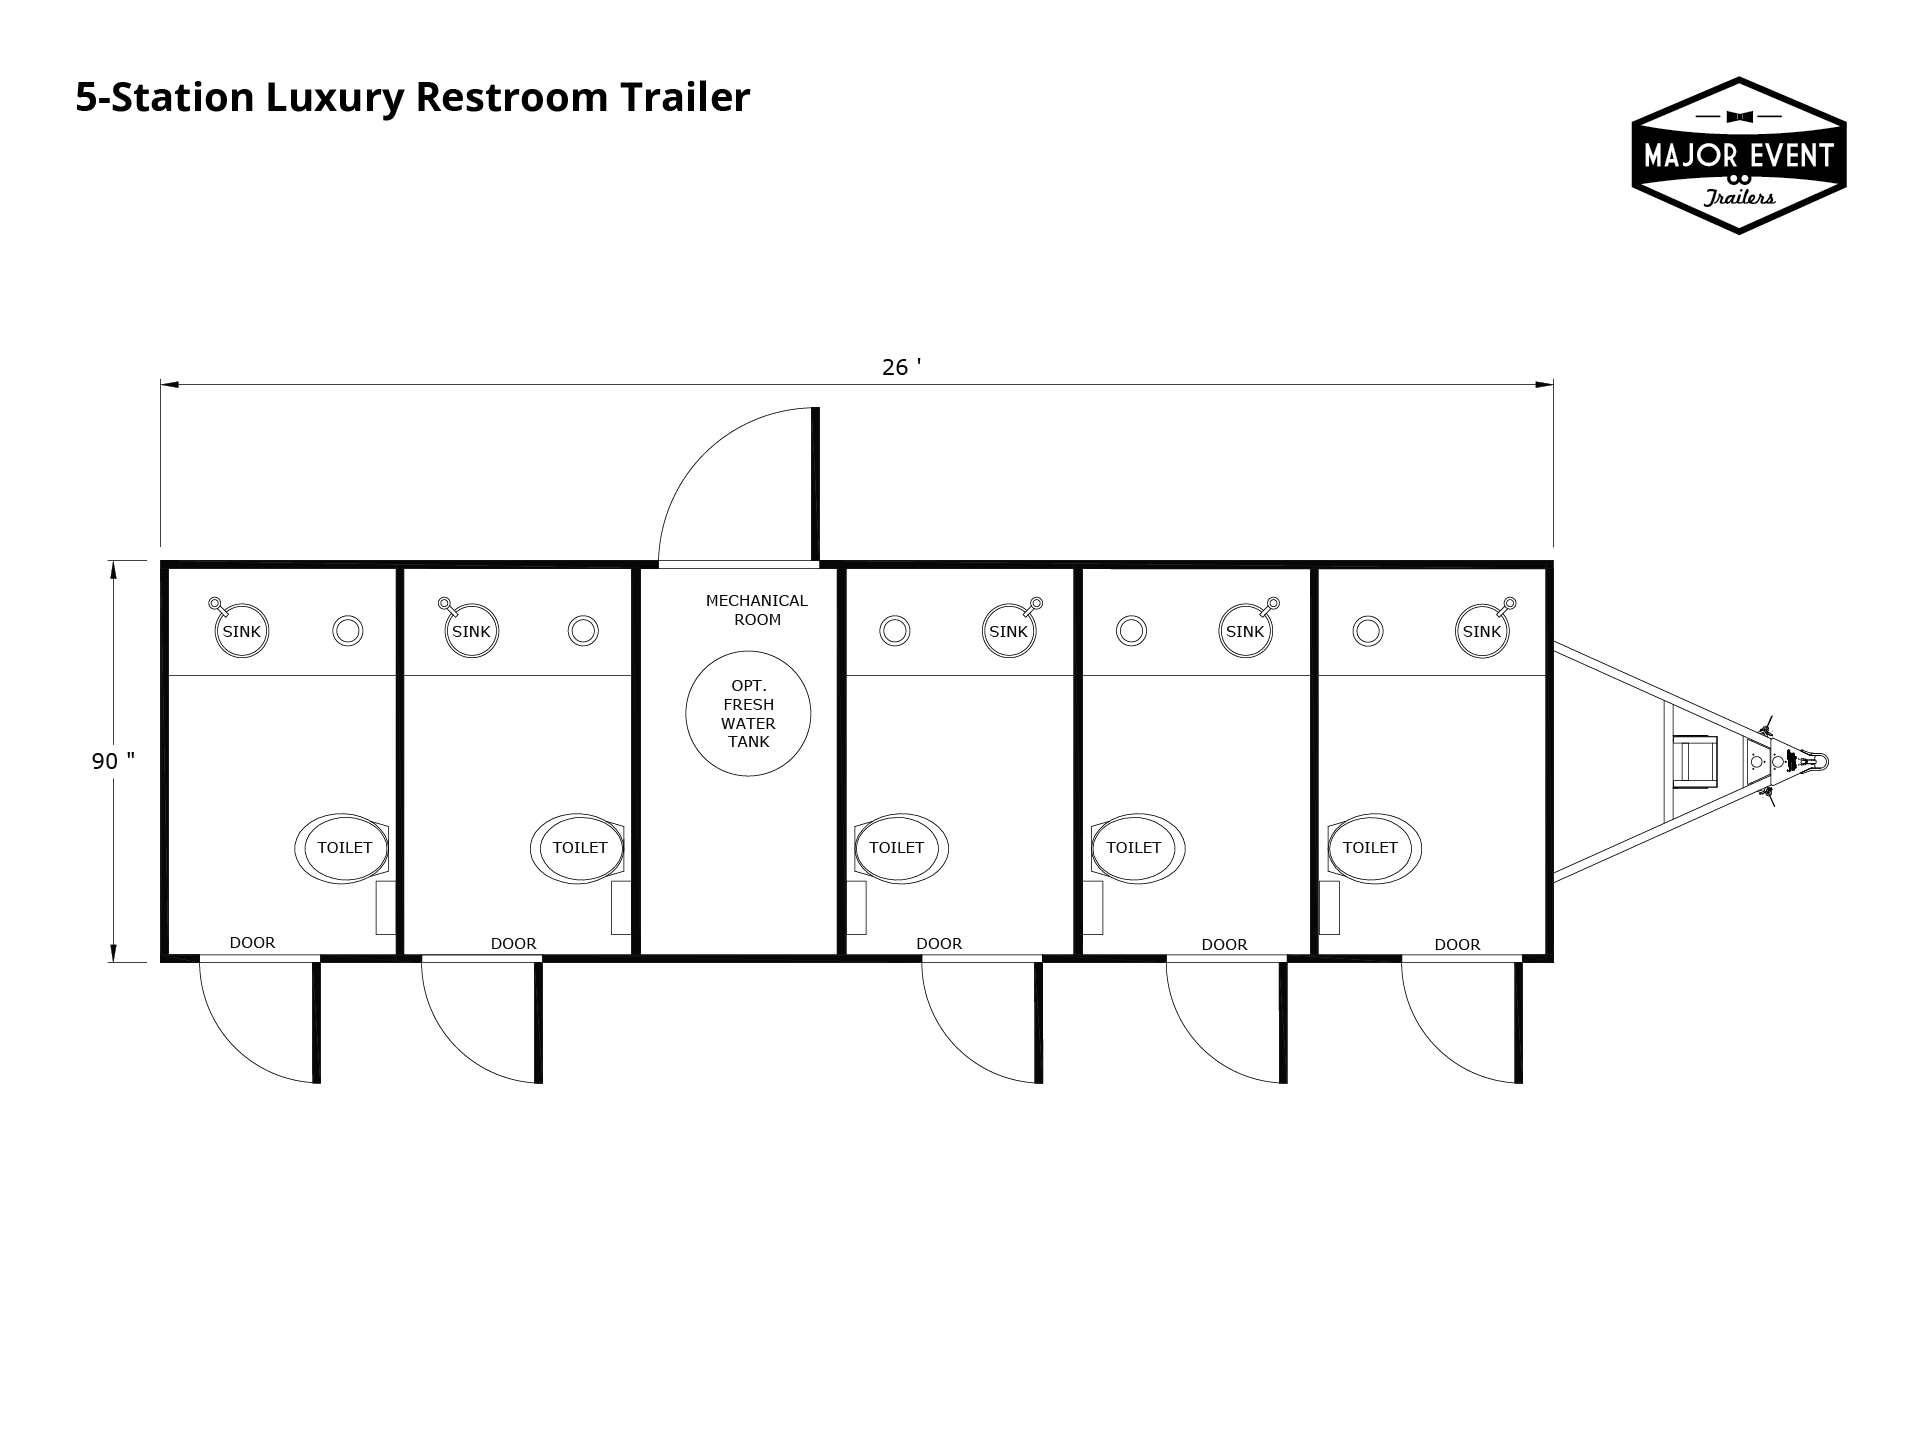 5-Station Luxury Restroom Trailer – Trailer Diagram View